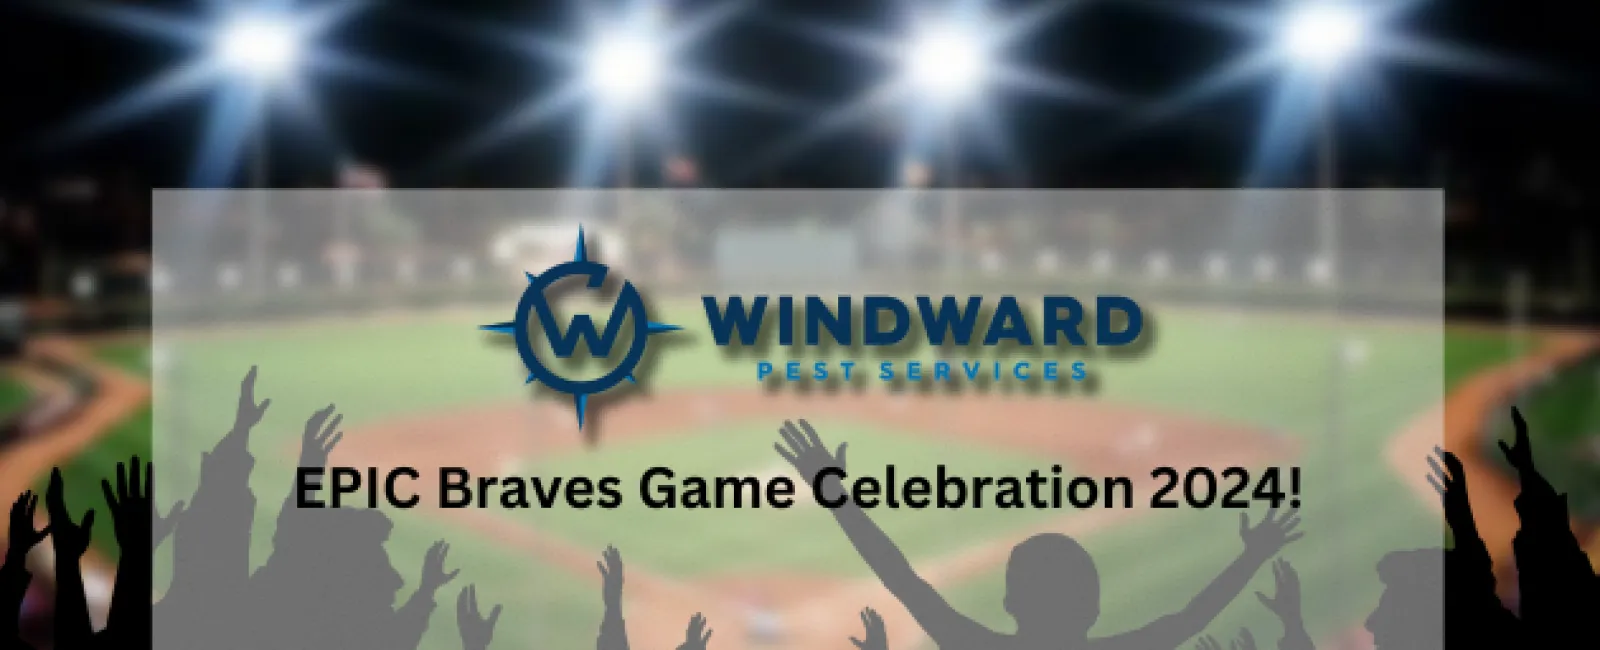 EPIC Braves Game Celebration 2024!